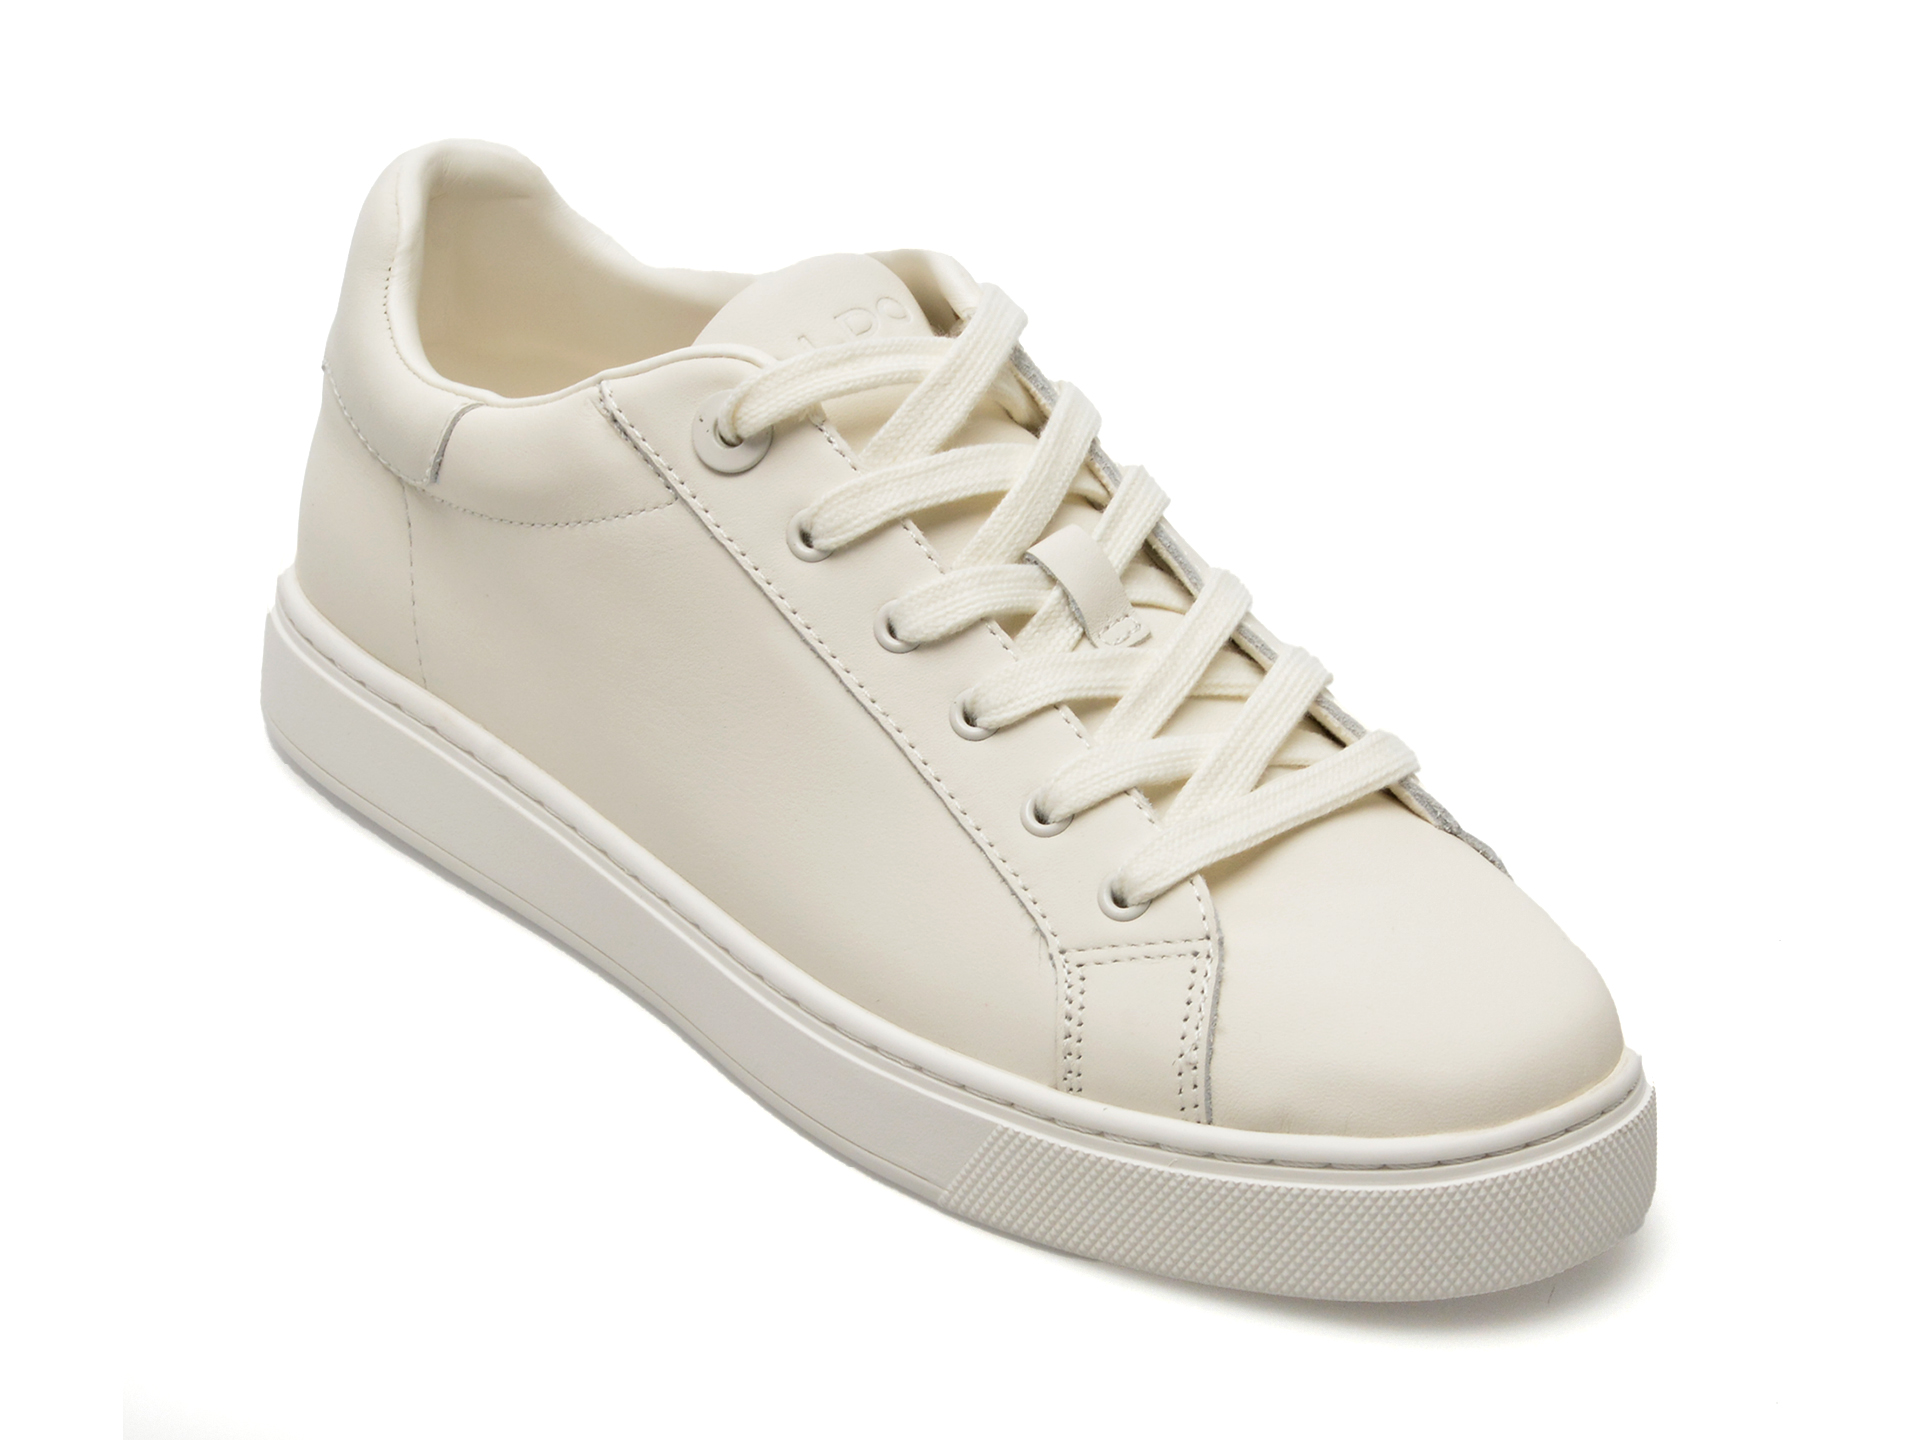 Pantofi ALDO albi, WOOLLY100, din nabuc Answear 2023-05-31